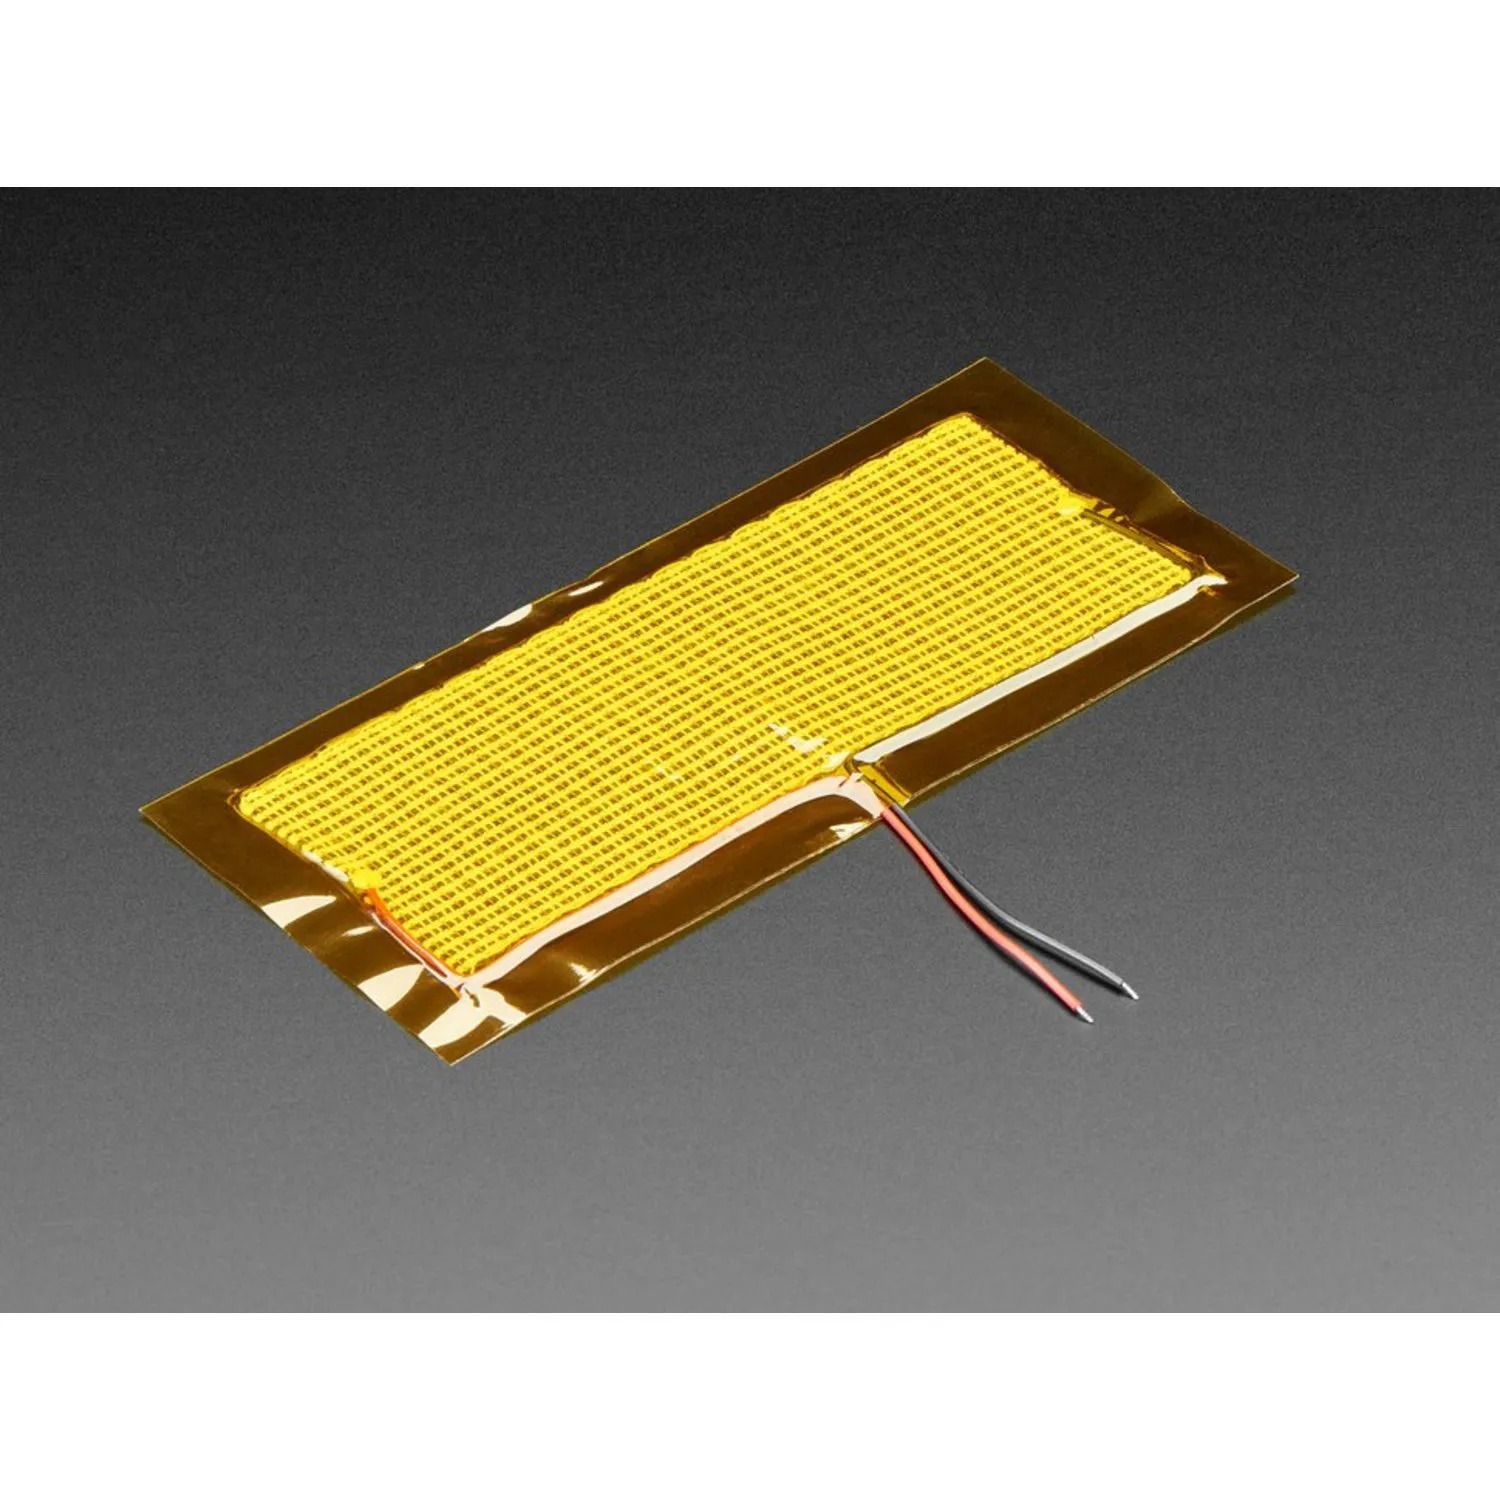 Photo of Electric Heating Pad - 14cm x 5cm